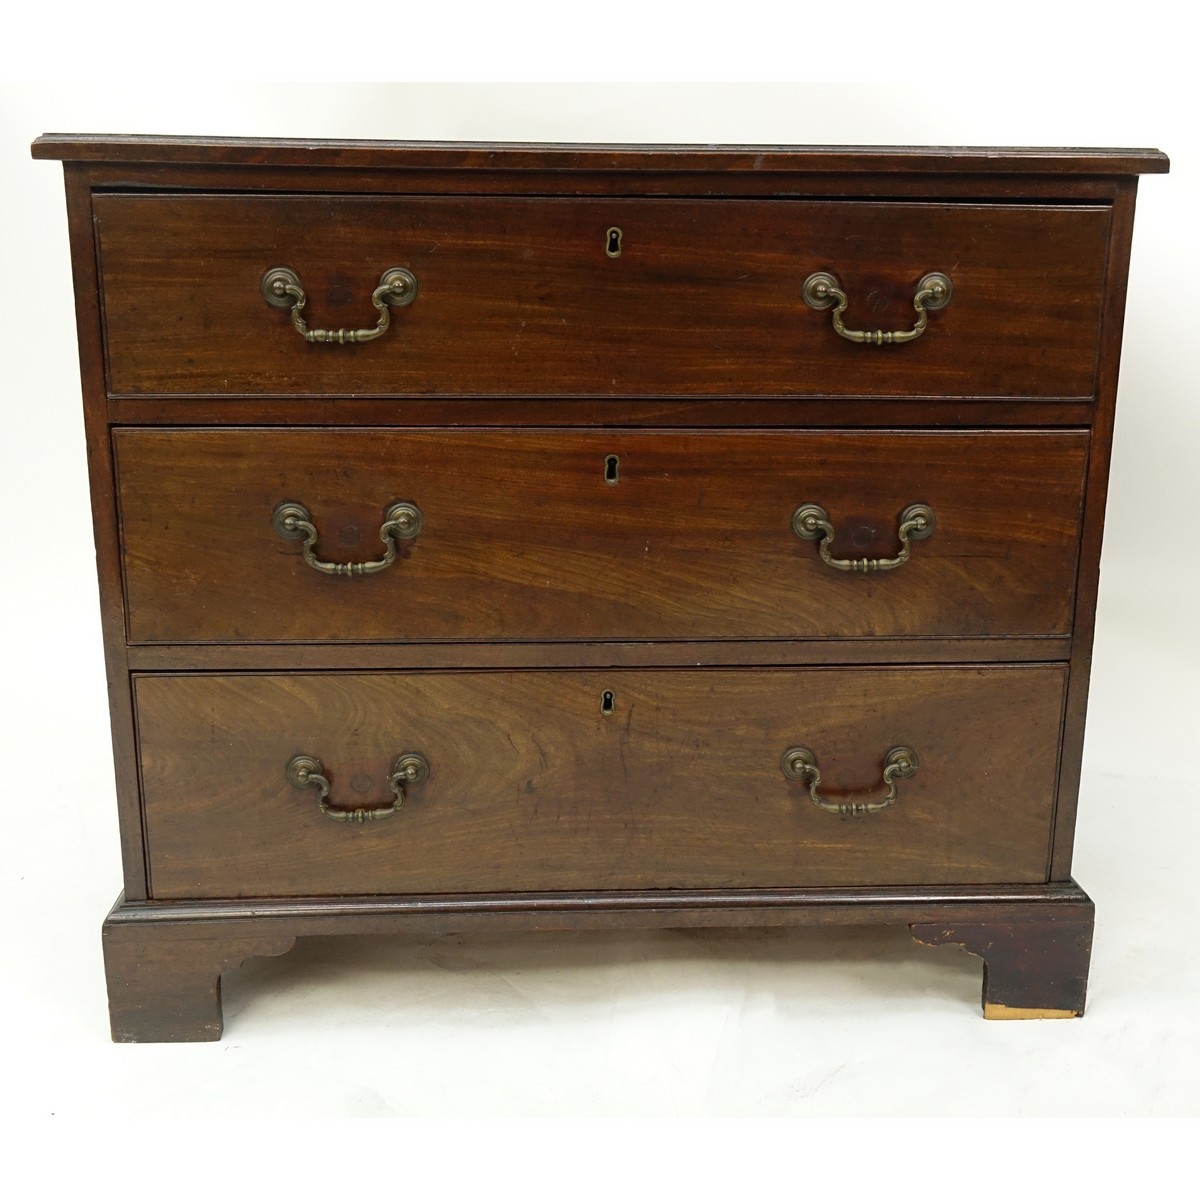 19th Century English Georgian Mahogany Chest of Drawers/Commode. Three large sliding drawers with bracket feet.